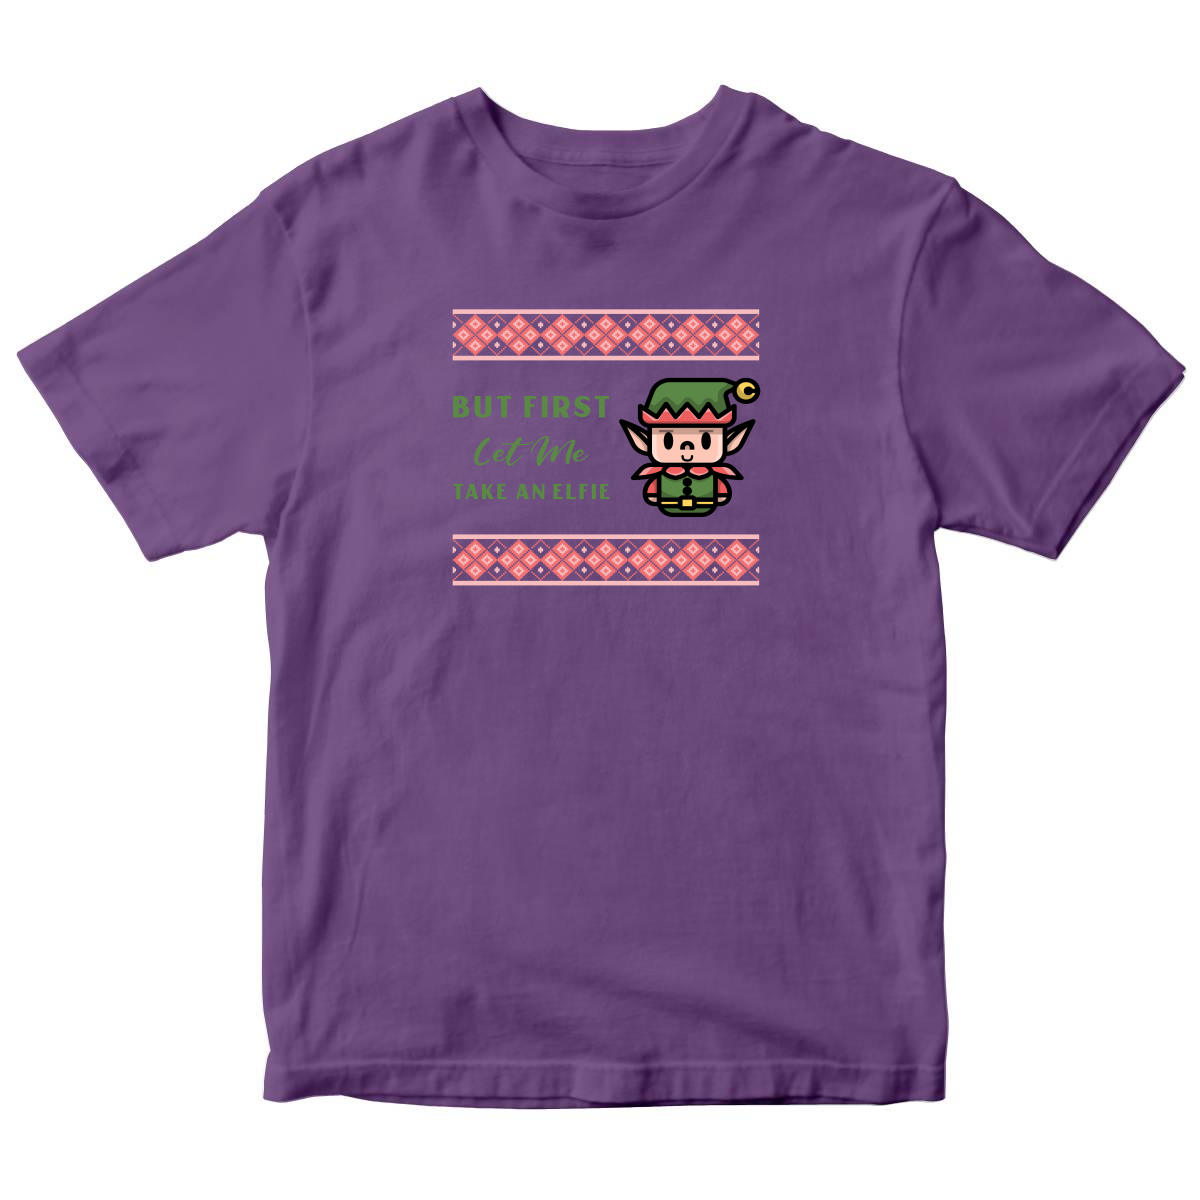 But First Let Me Take an Elfie Kids T-shirt | Purple